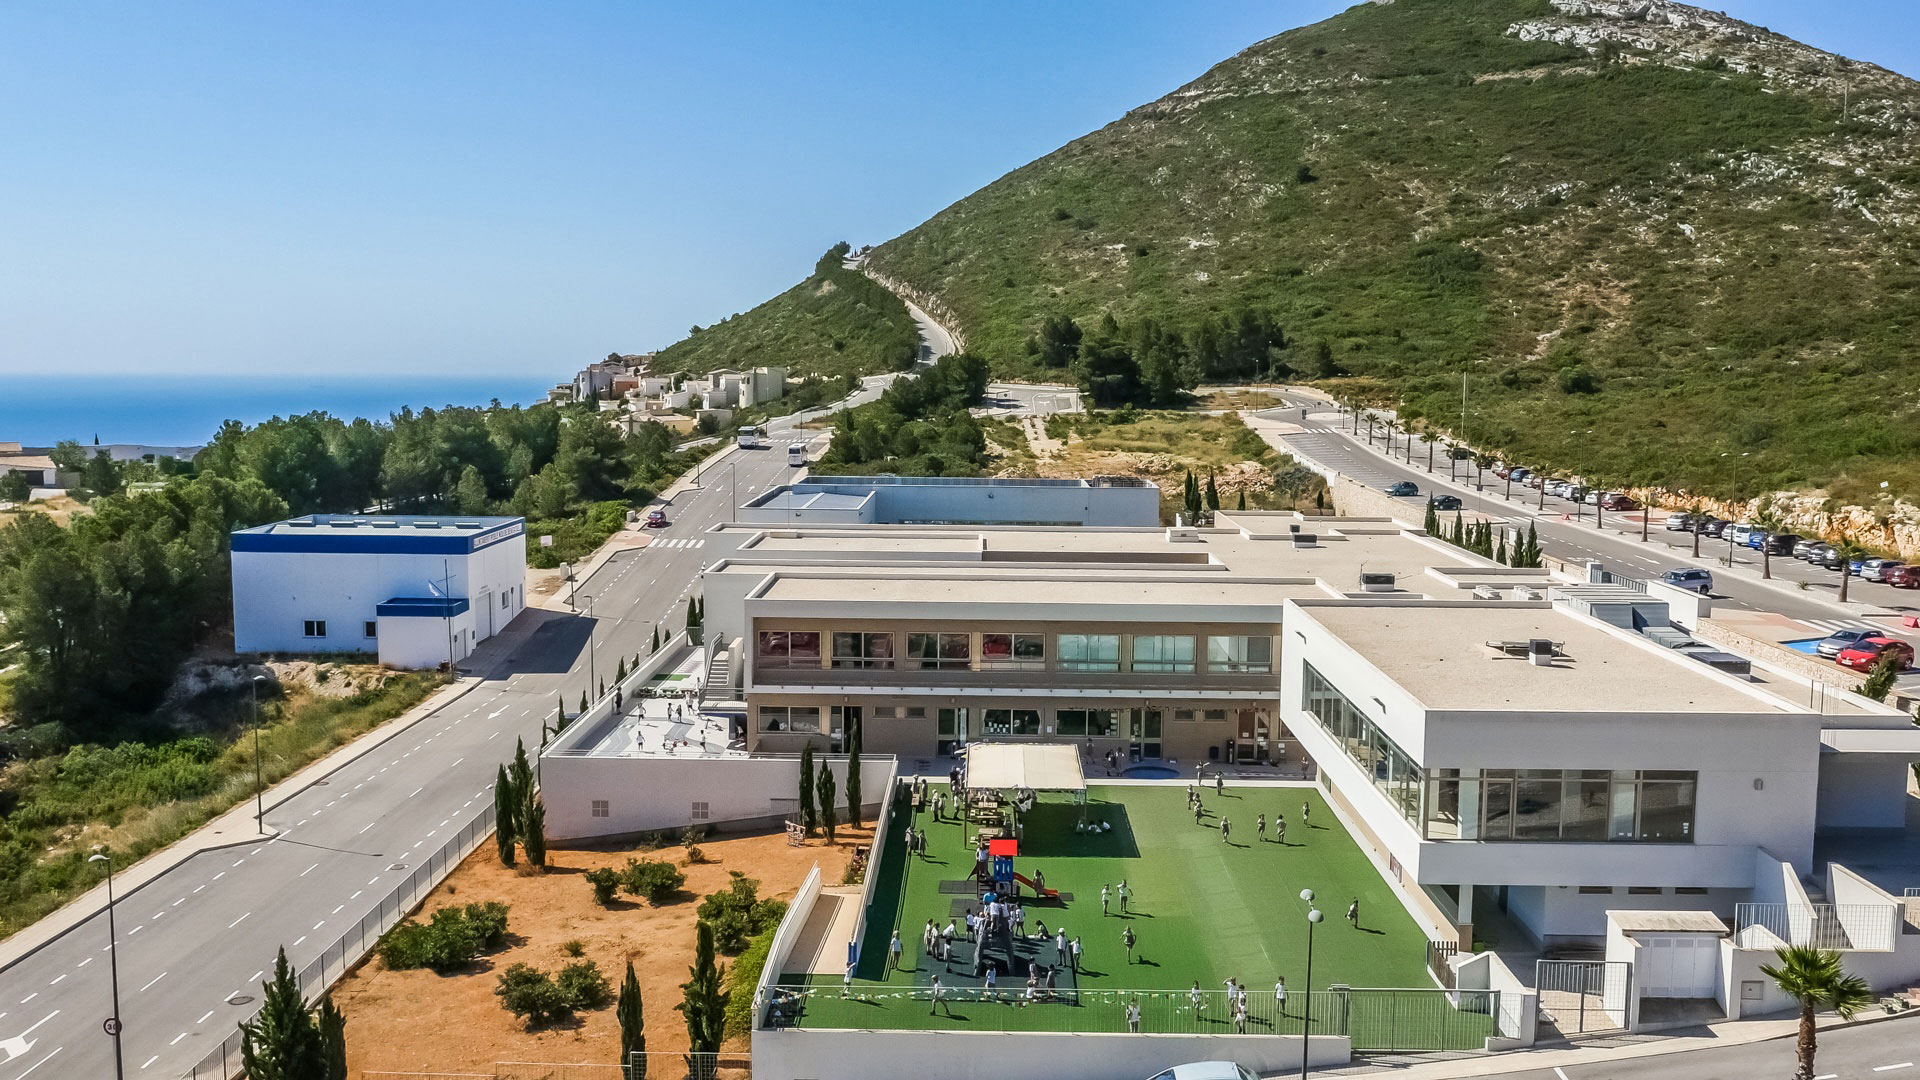 Modern villa with sea views